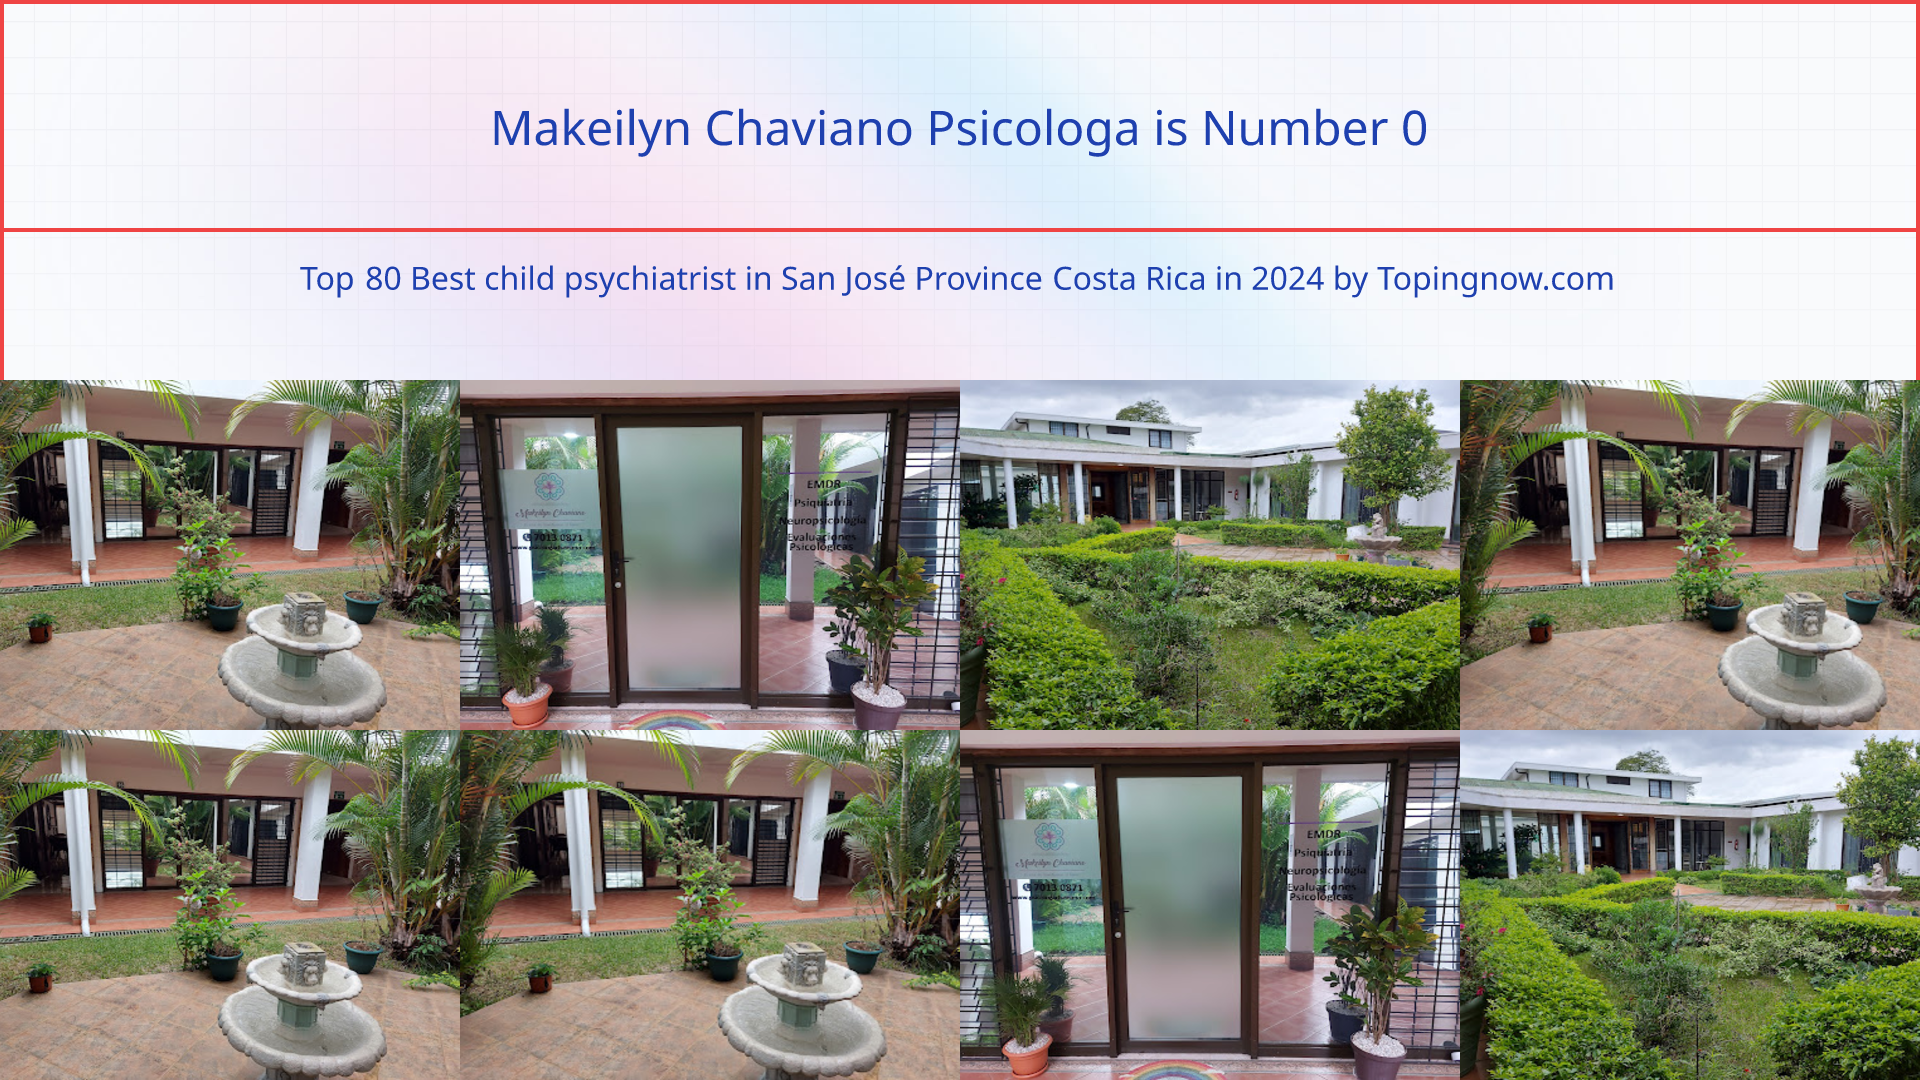 Makeilyn Chaviano Psicologa: Top 80 Best child psychiatrist in San José Province Costa Rica in 2024